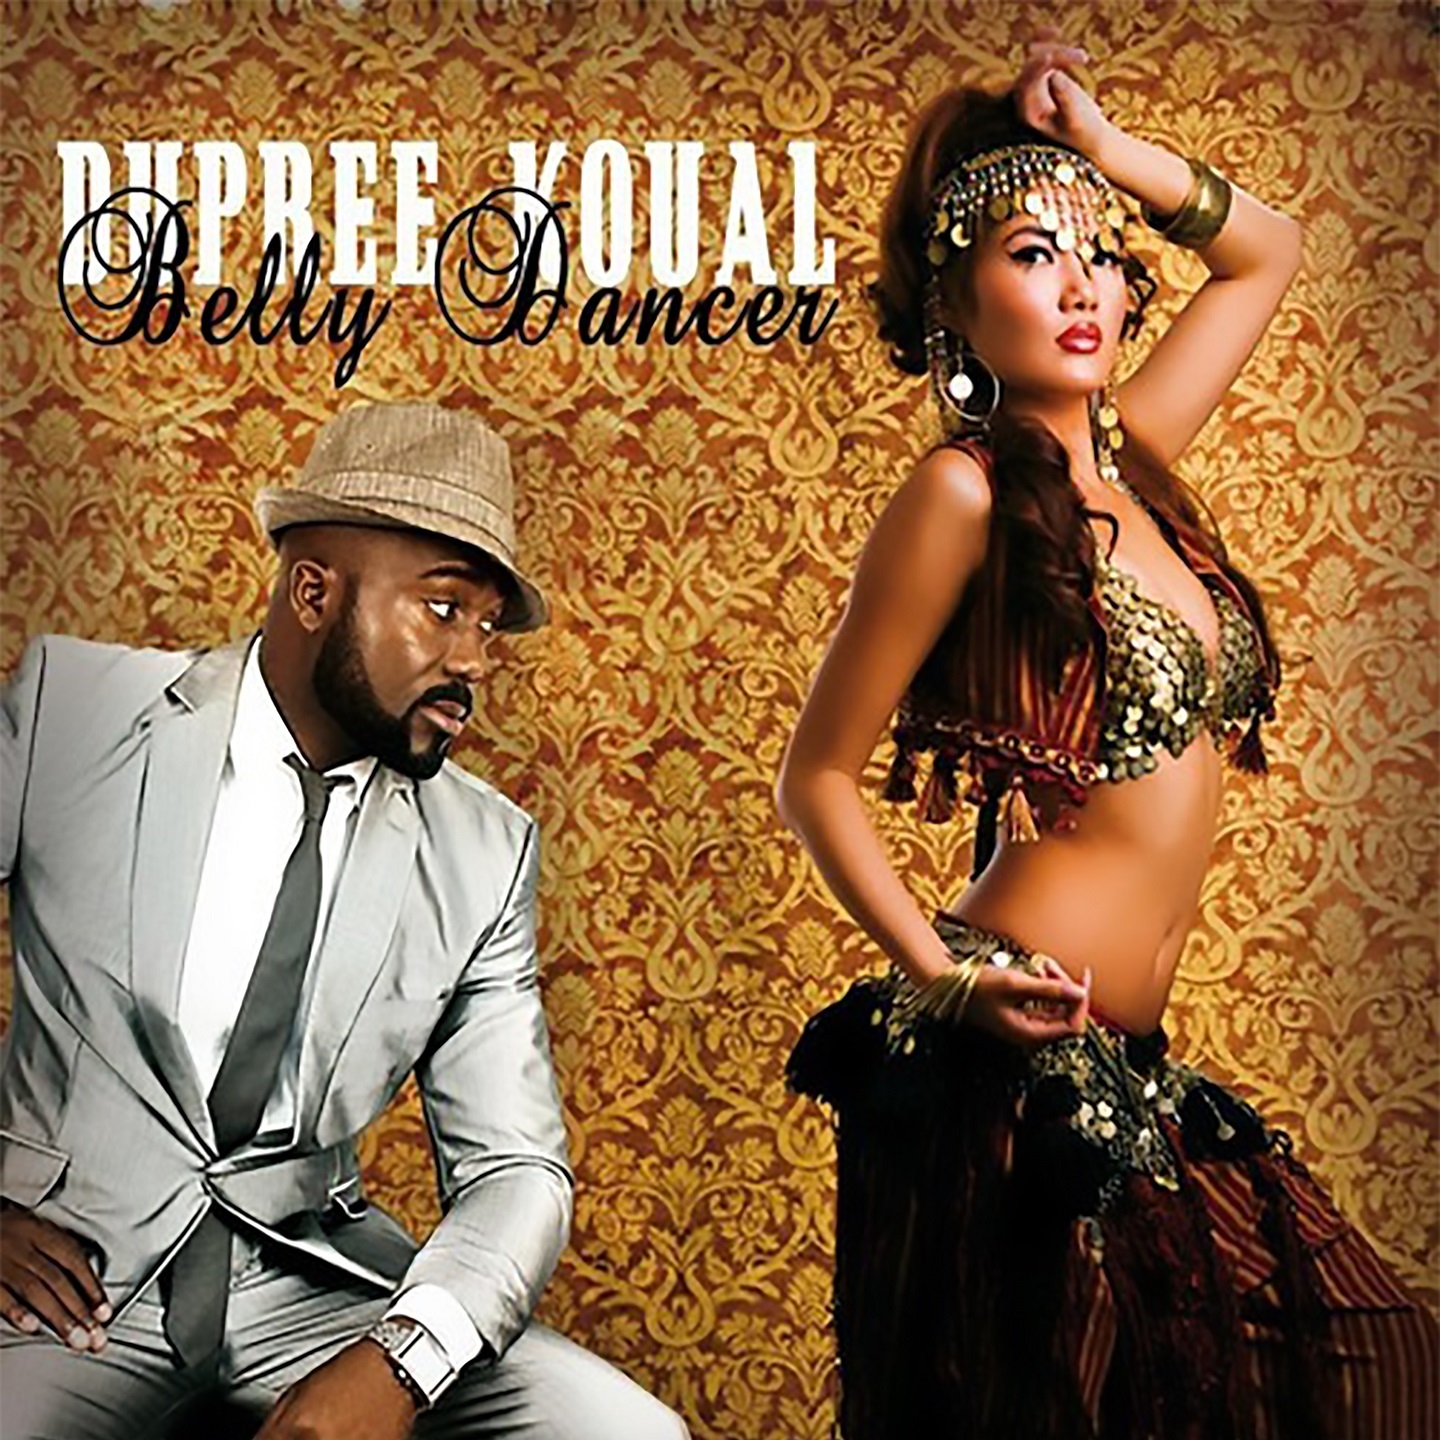 Dupree Koual - Belly Dancer